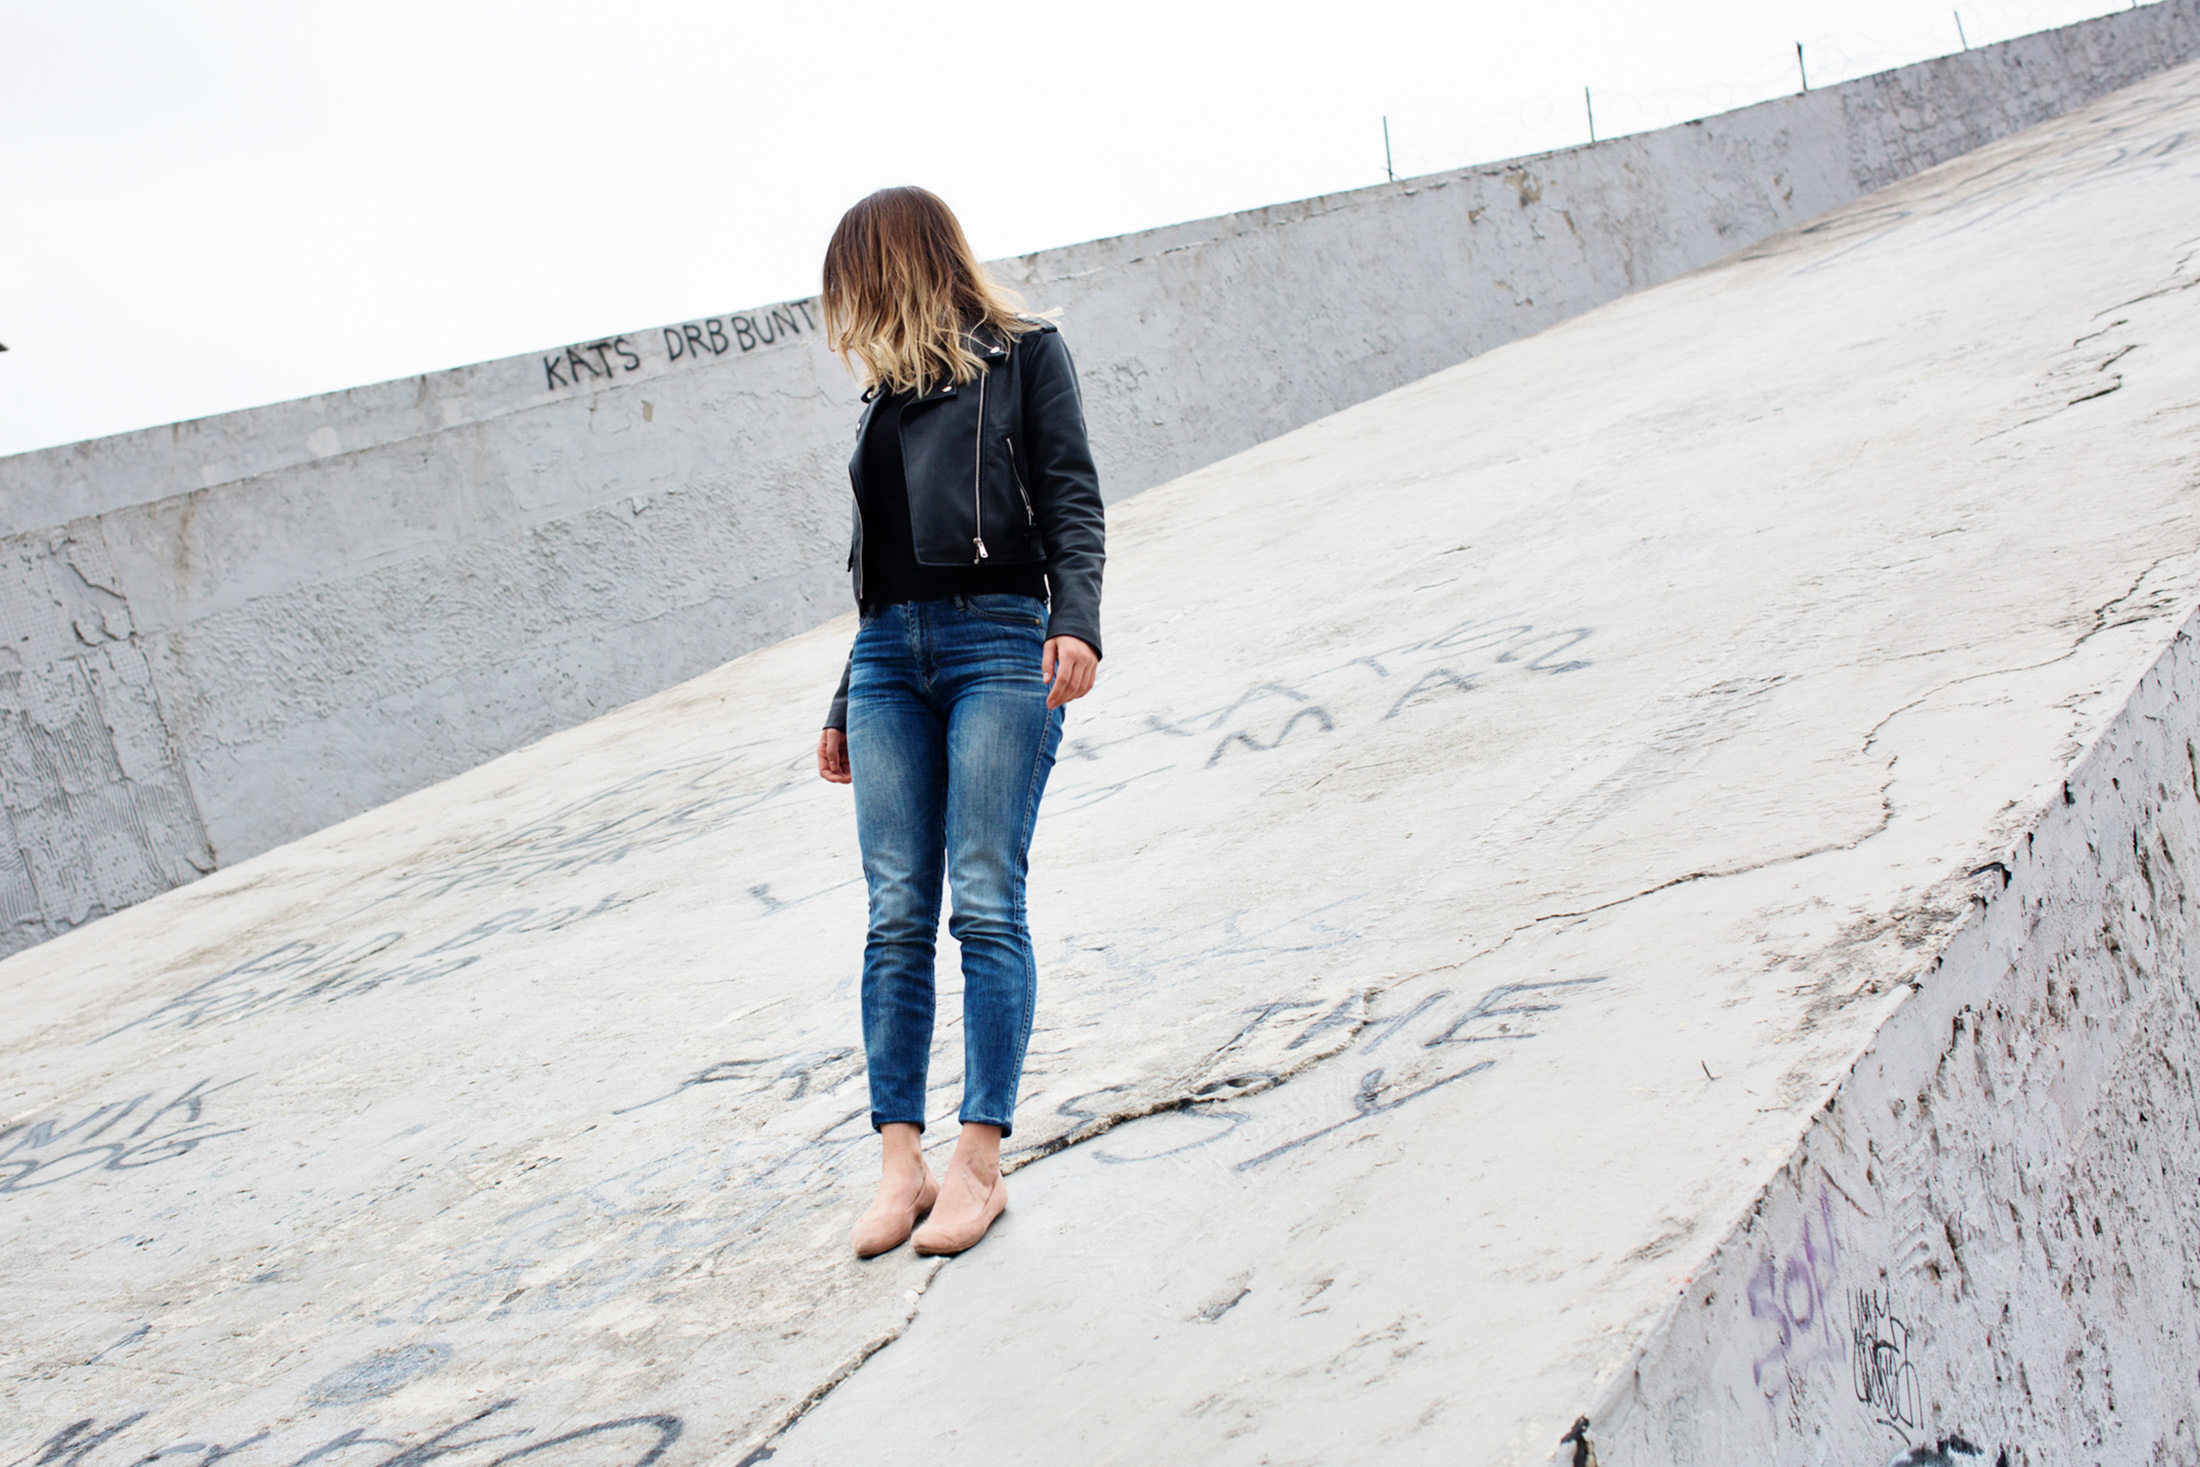  Agida, 22, standing on the Pyramid building in Tirana, Albania. 